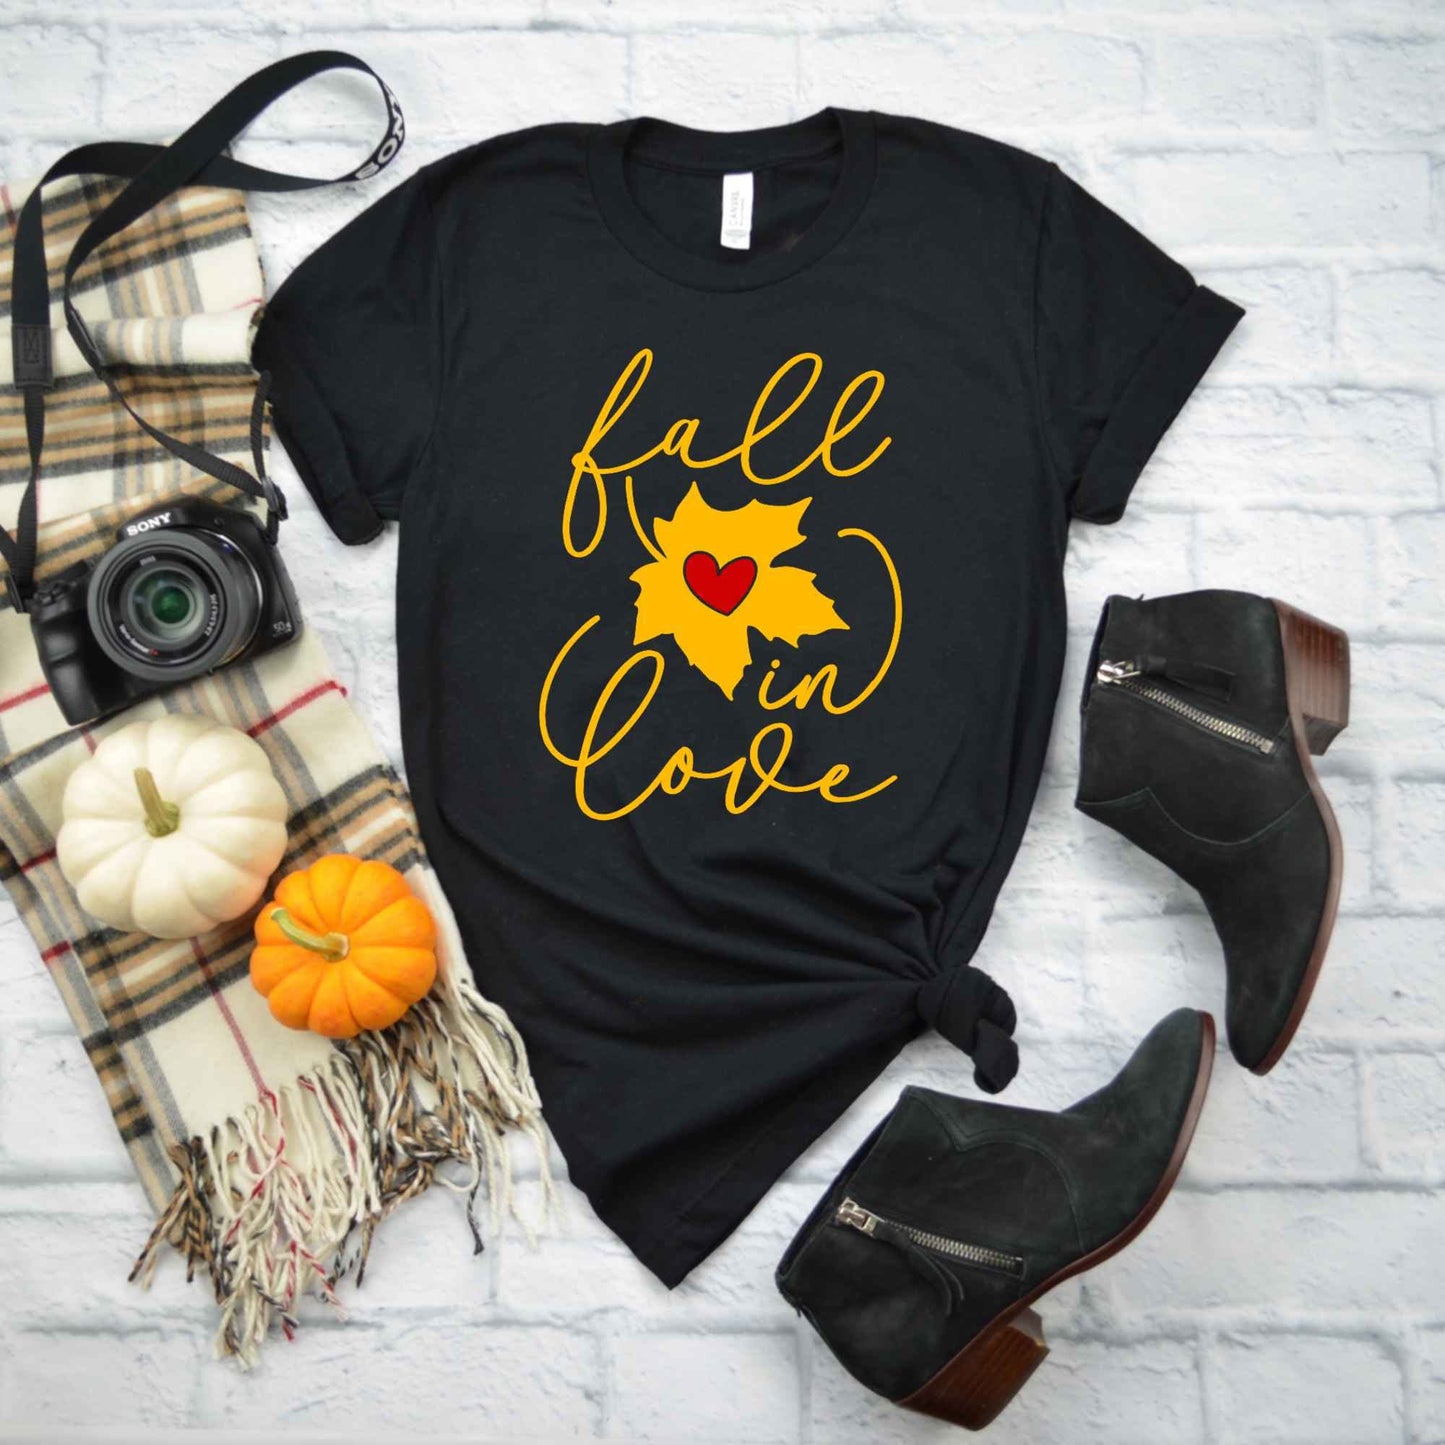 Fall in Love unisex t-shirt - Pumpkin Spice Shirt - Bonfires - Falling Leaves - Autumn Shirt - Womens Fall Shirt - Hello Fall